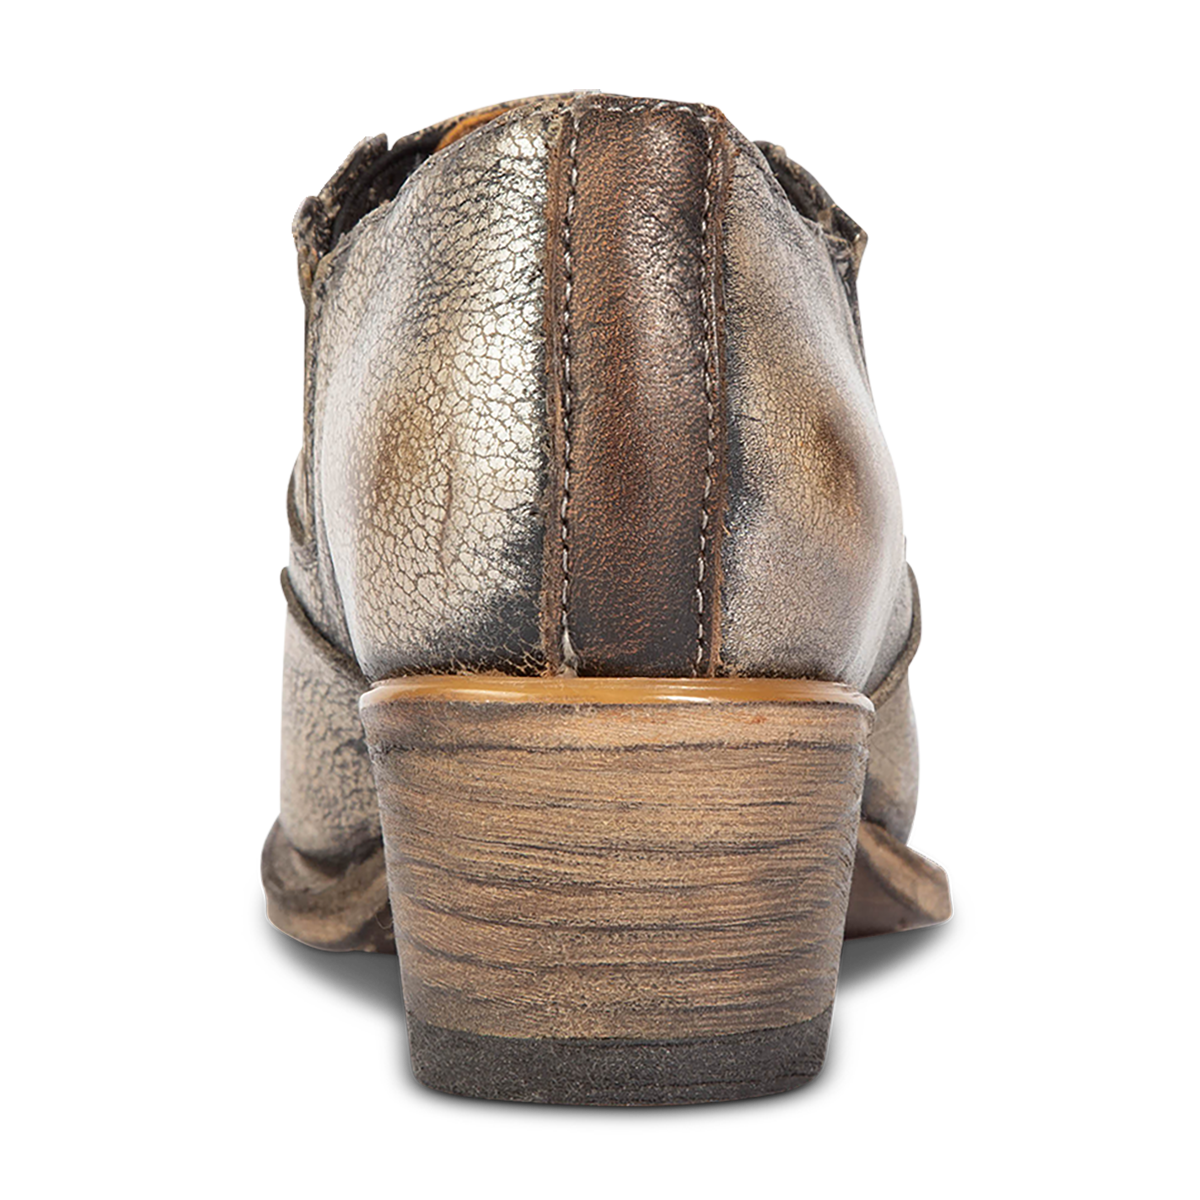 Back view showing stacked wooden heel on FREEBIRD women's Wyoming beige western shoe